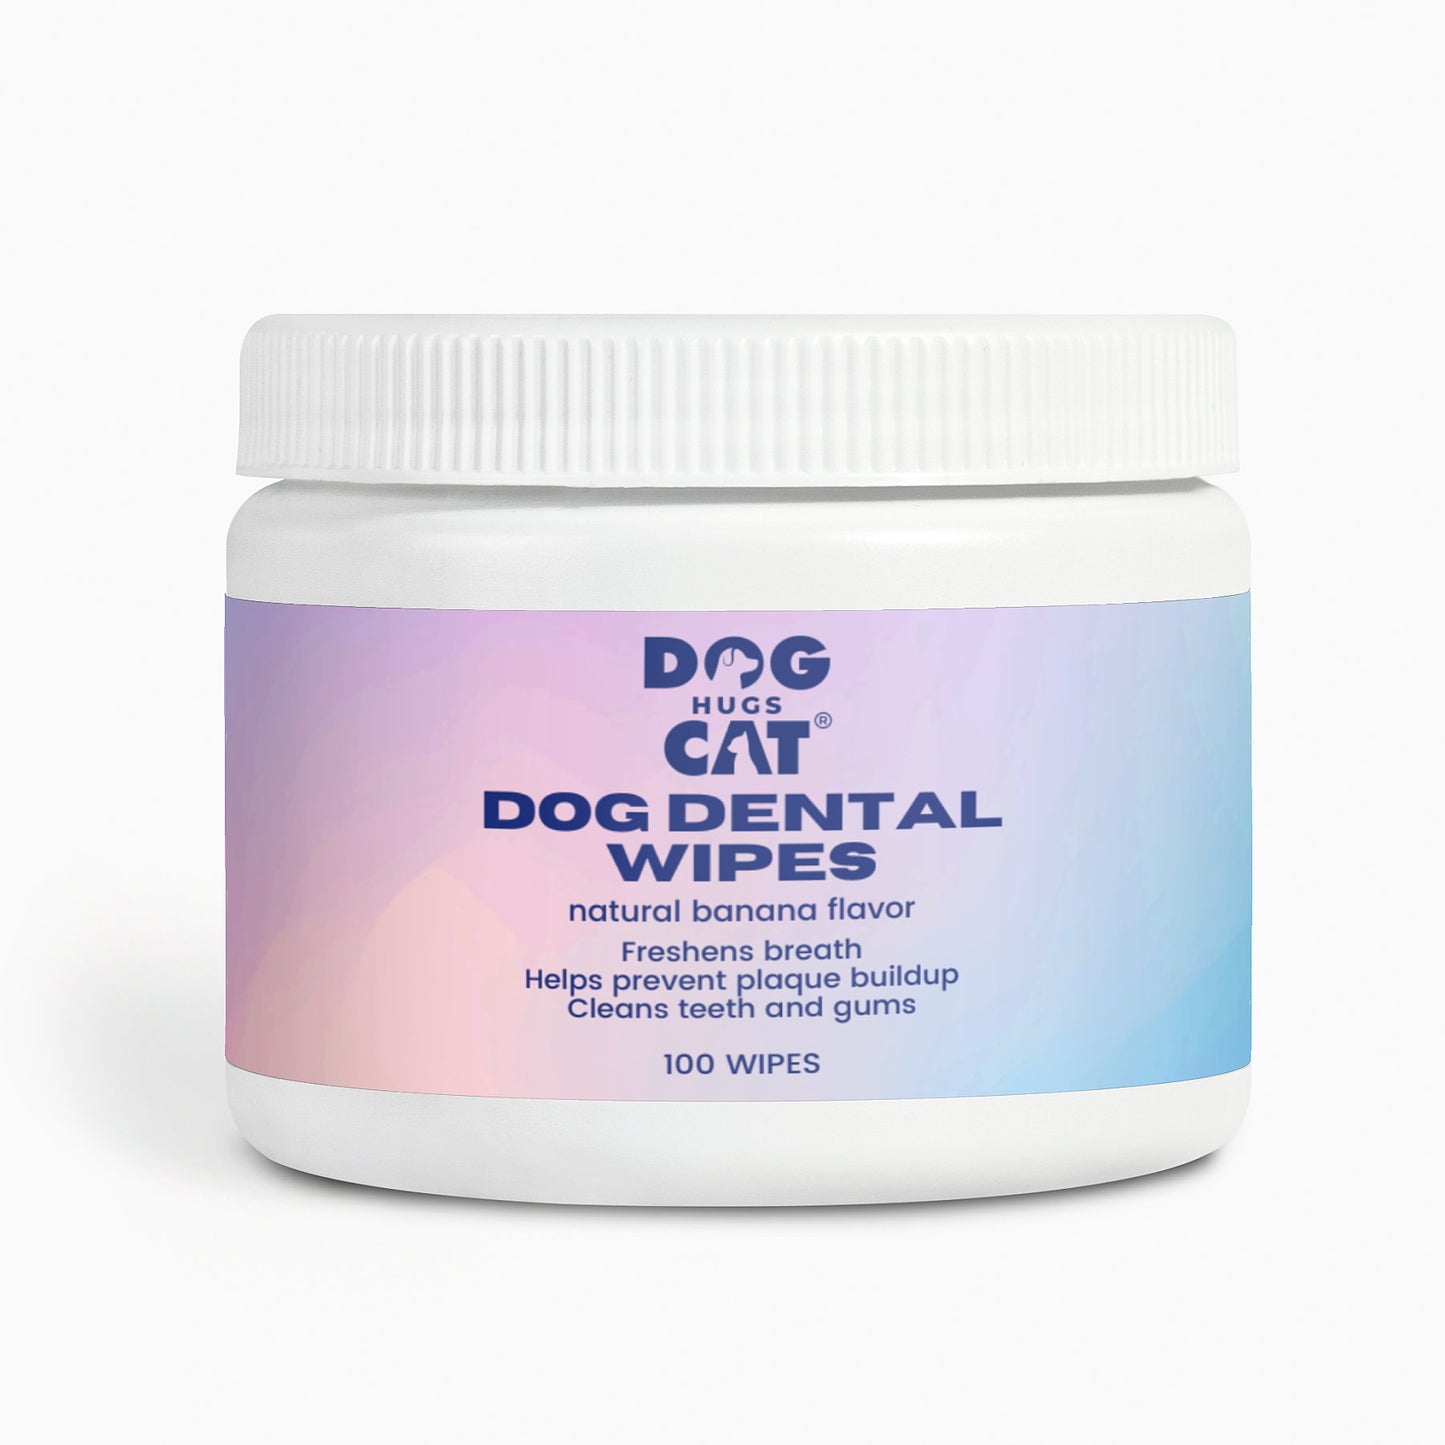 Dog Hugs Cat - Dog Dental Wipes